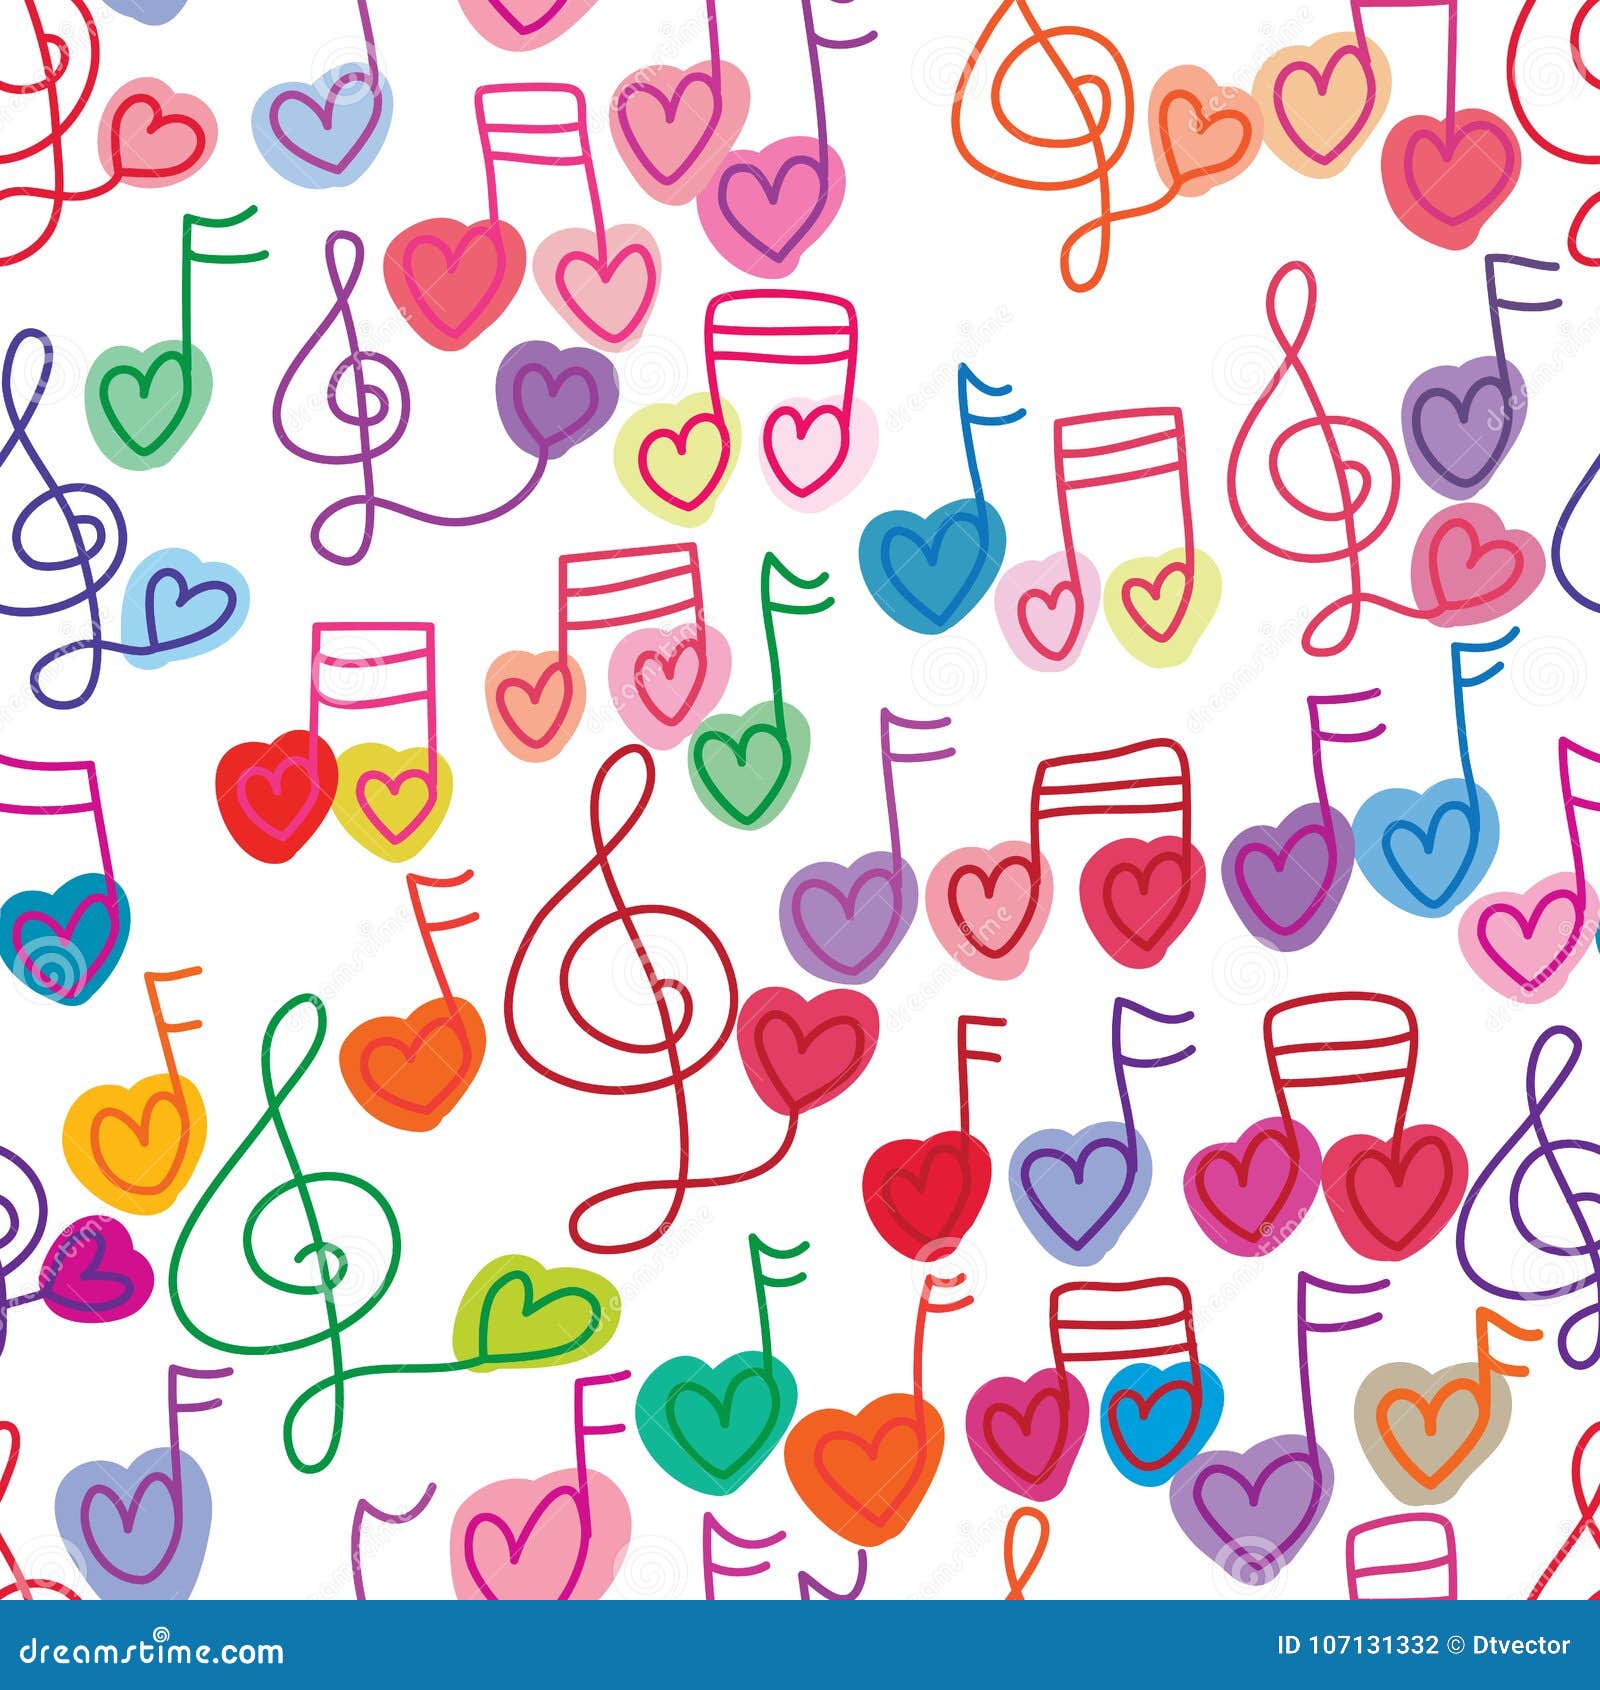 love music note free paint seamless pattern